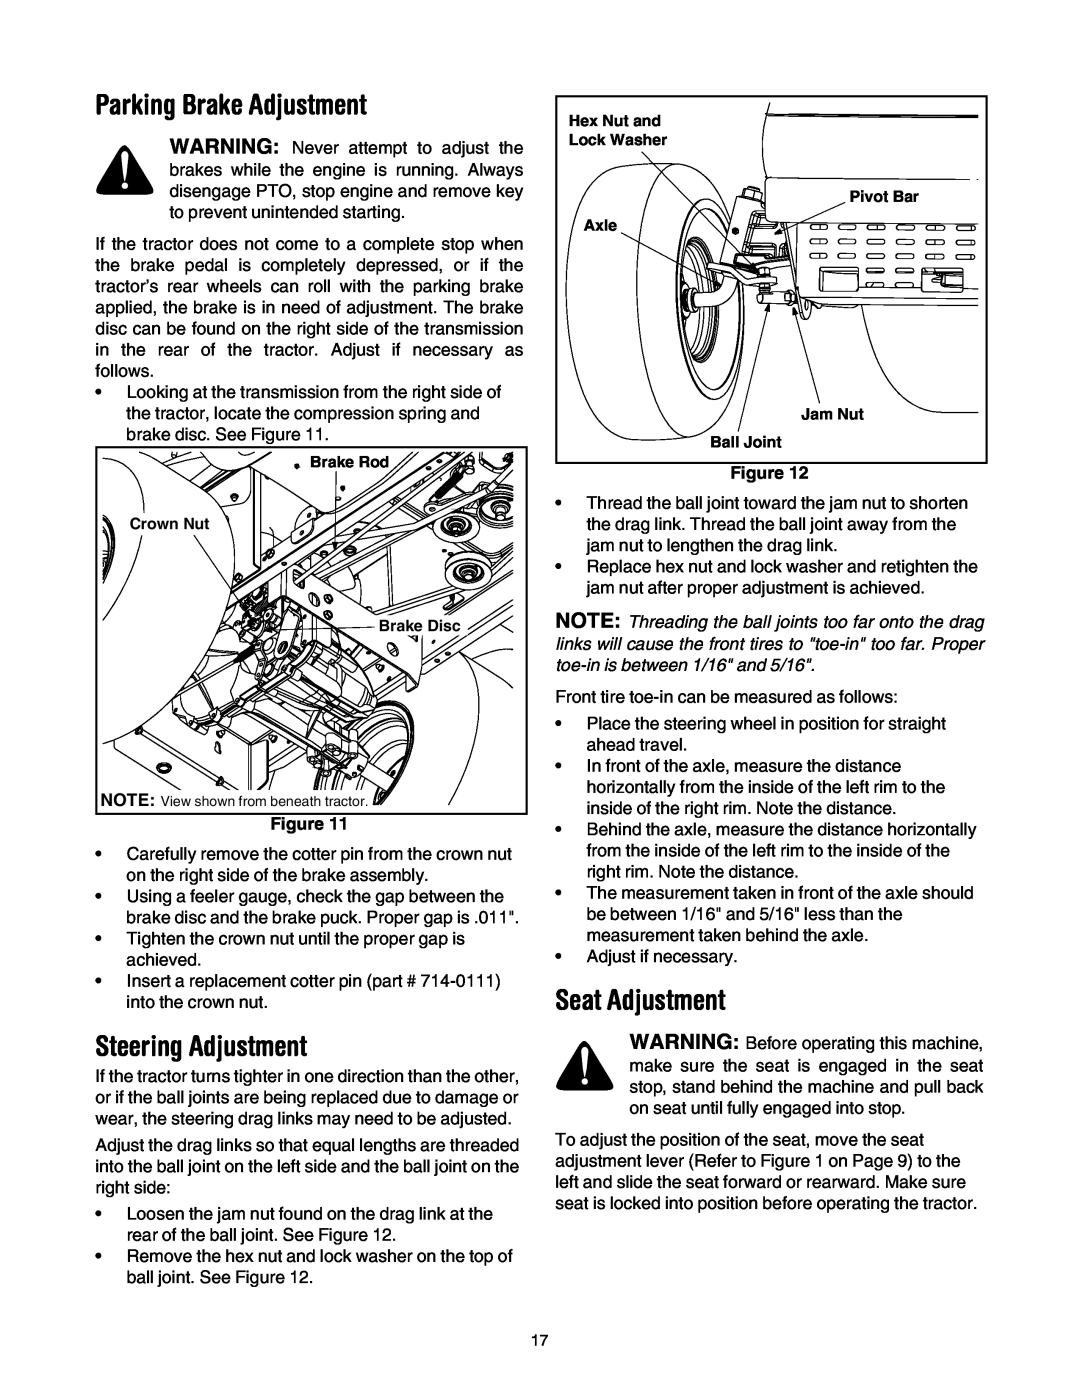 Bolens LT1024 manual Parking Brake Adjustment, Steering Adjustment, Seat Adjustment, Figure 